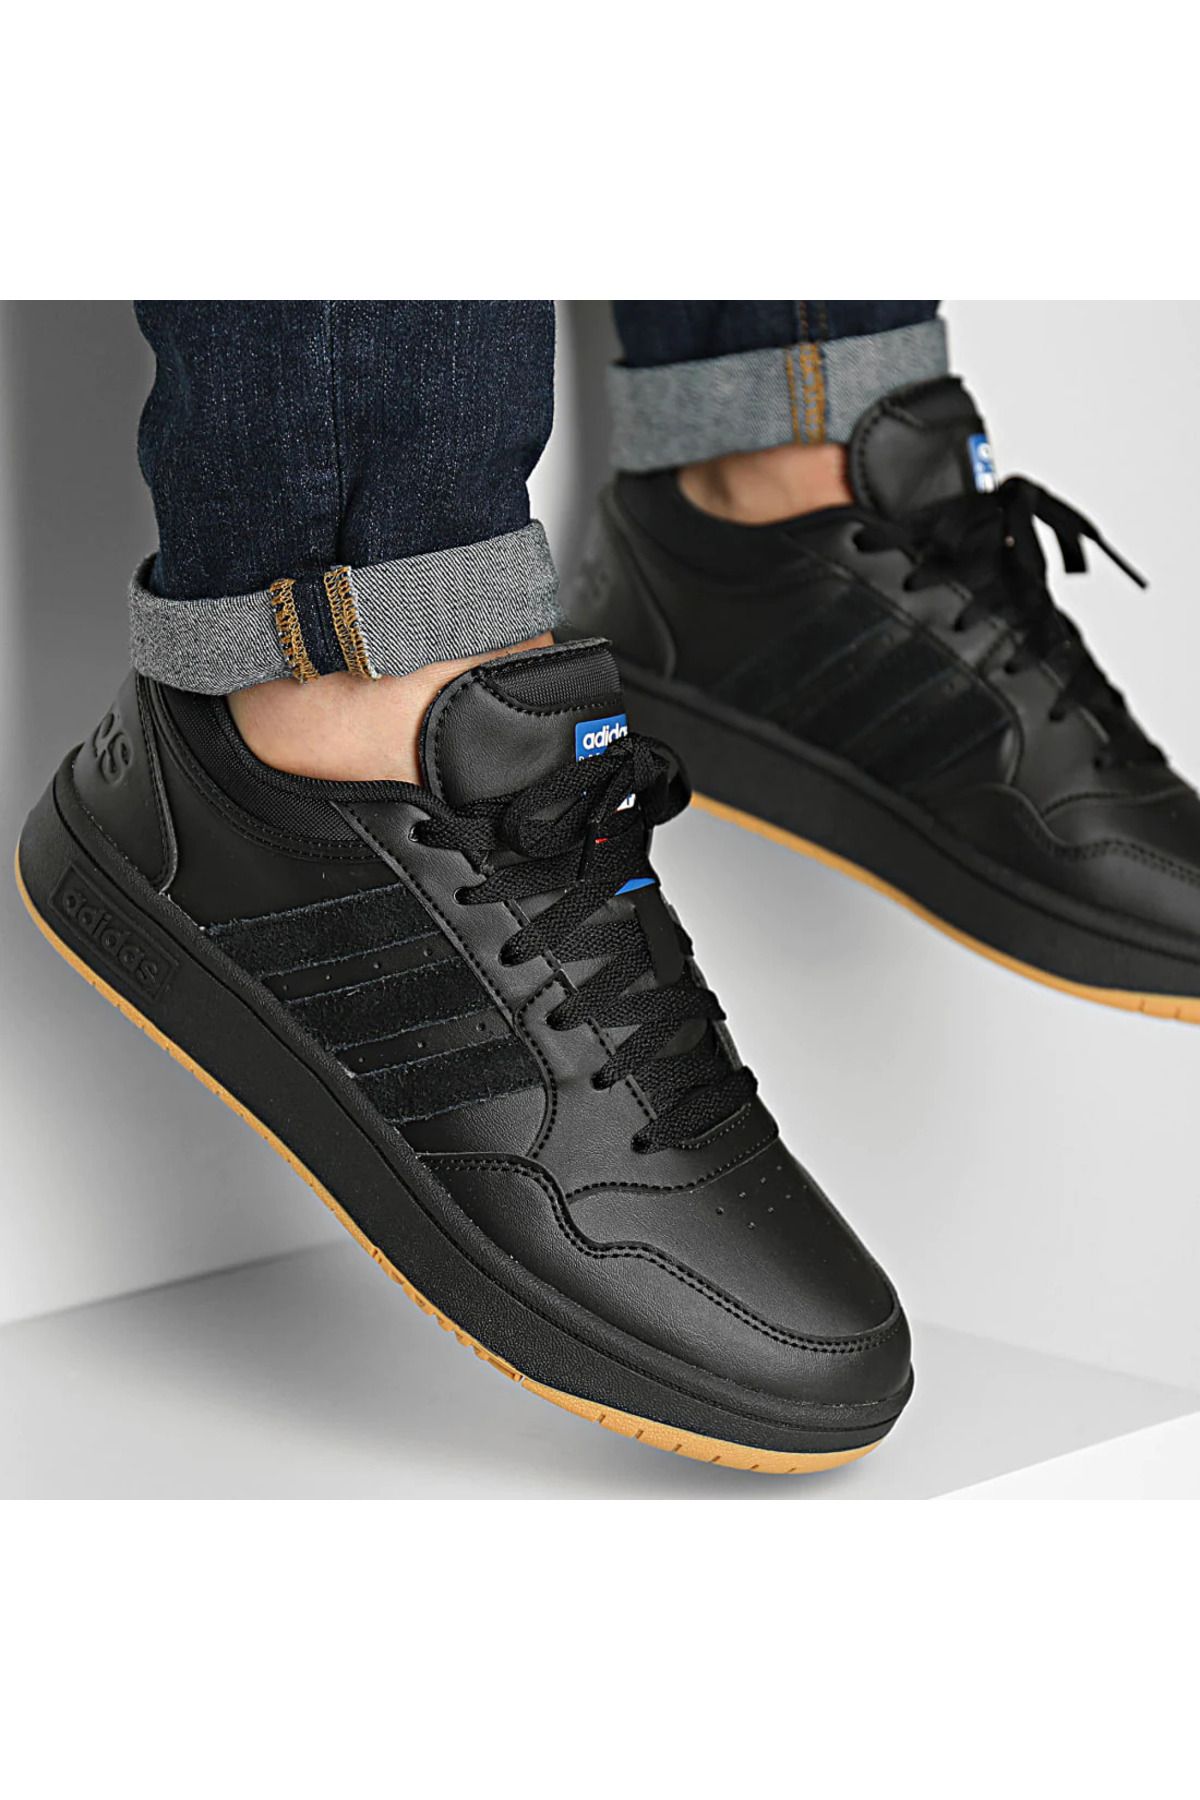 adidas Hoops 3.0 Günlük Ayakkabı Sneaker Siyah